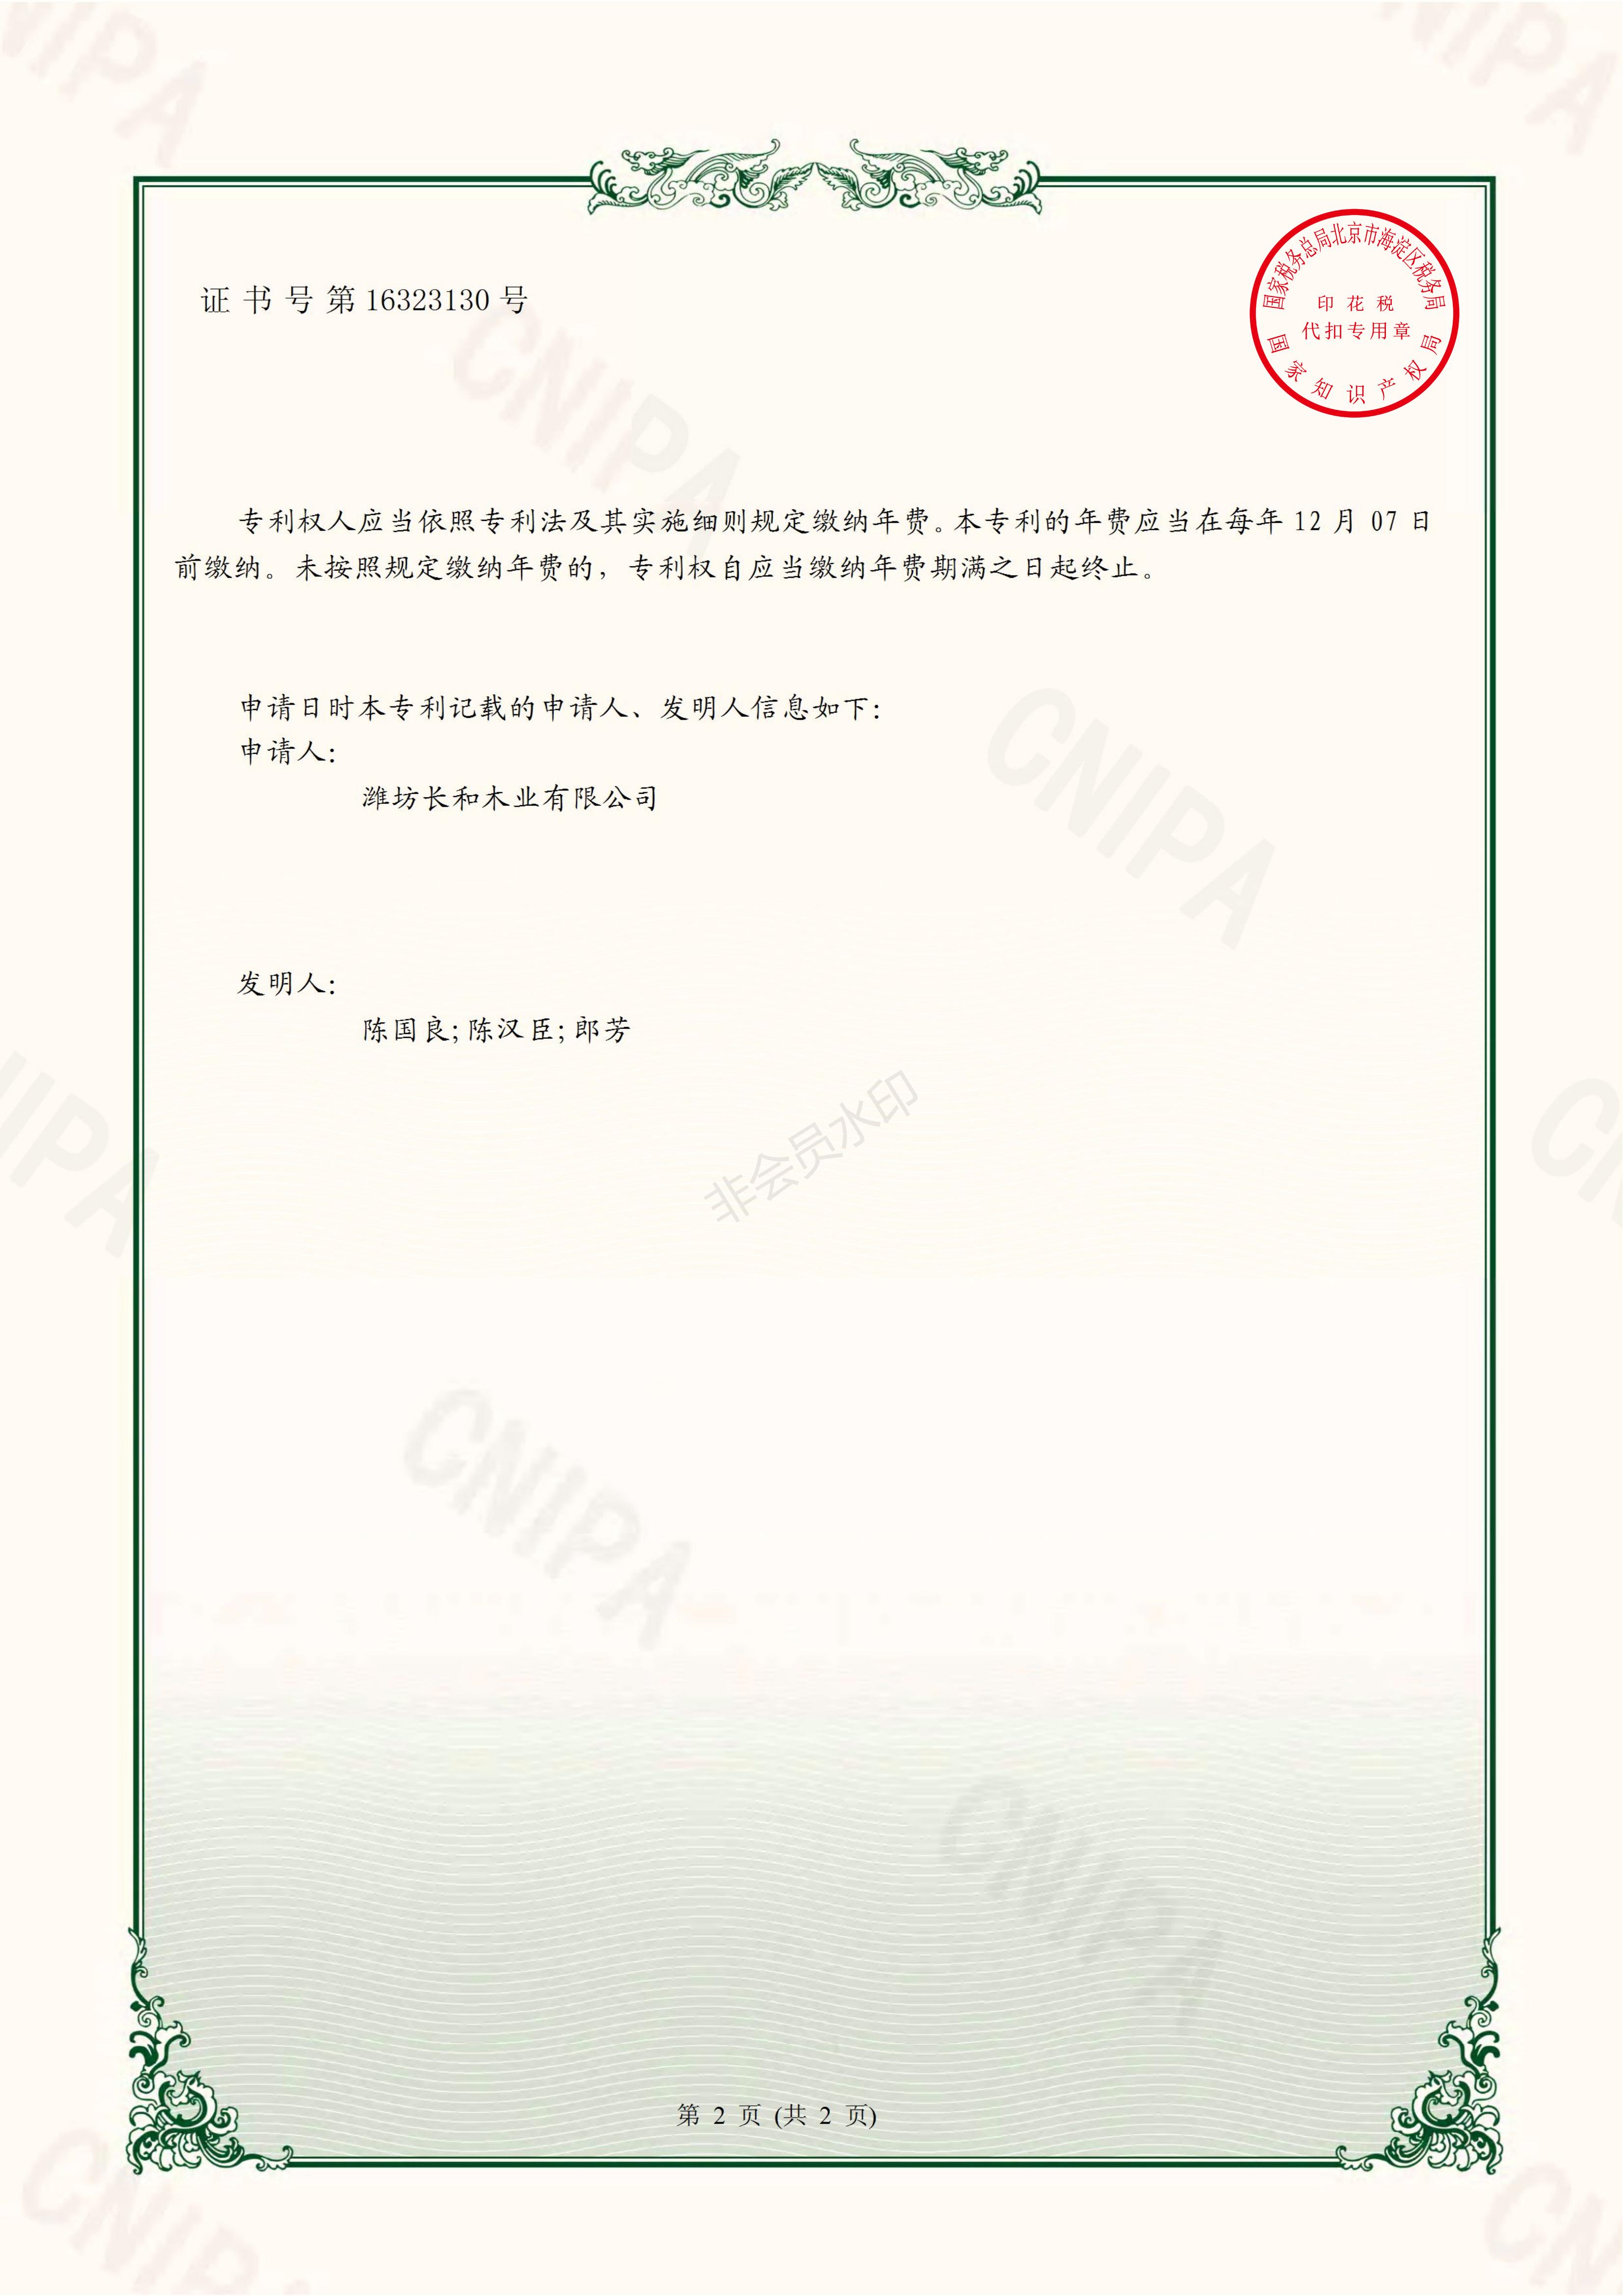 P20220294_2021230485399_一种木门生产用升降设备_实用新型专利证书(签章)_01.jpg